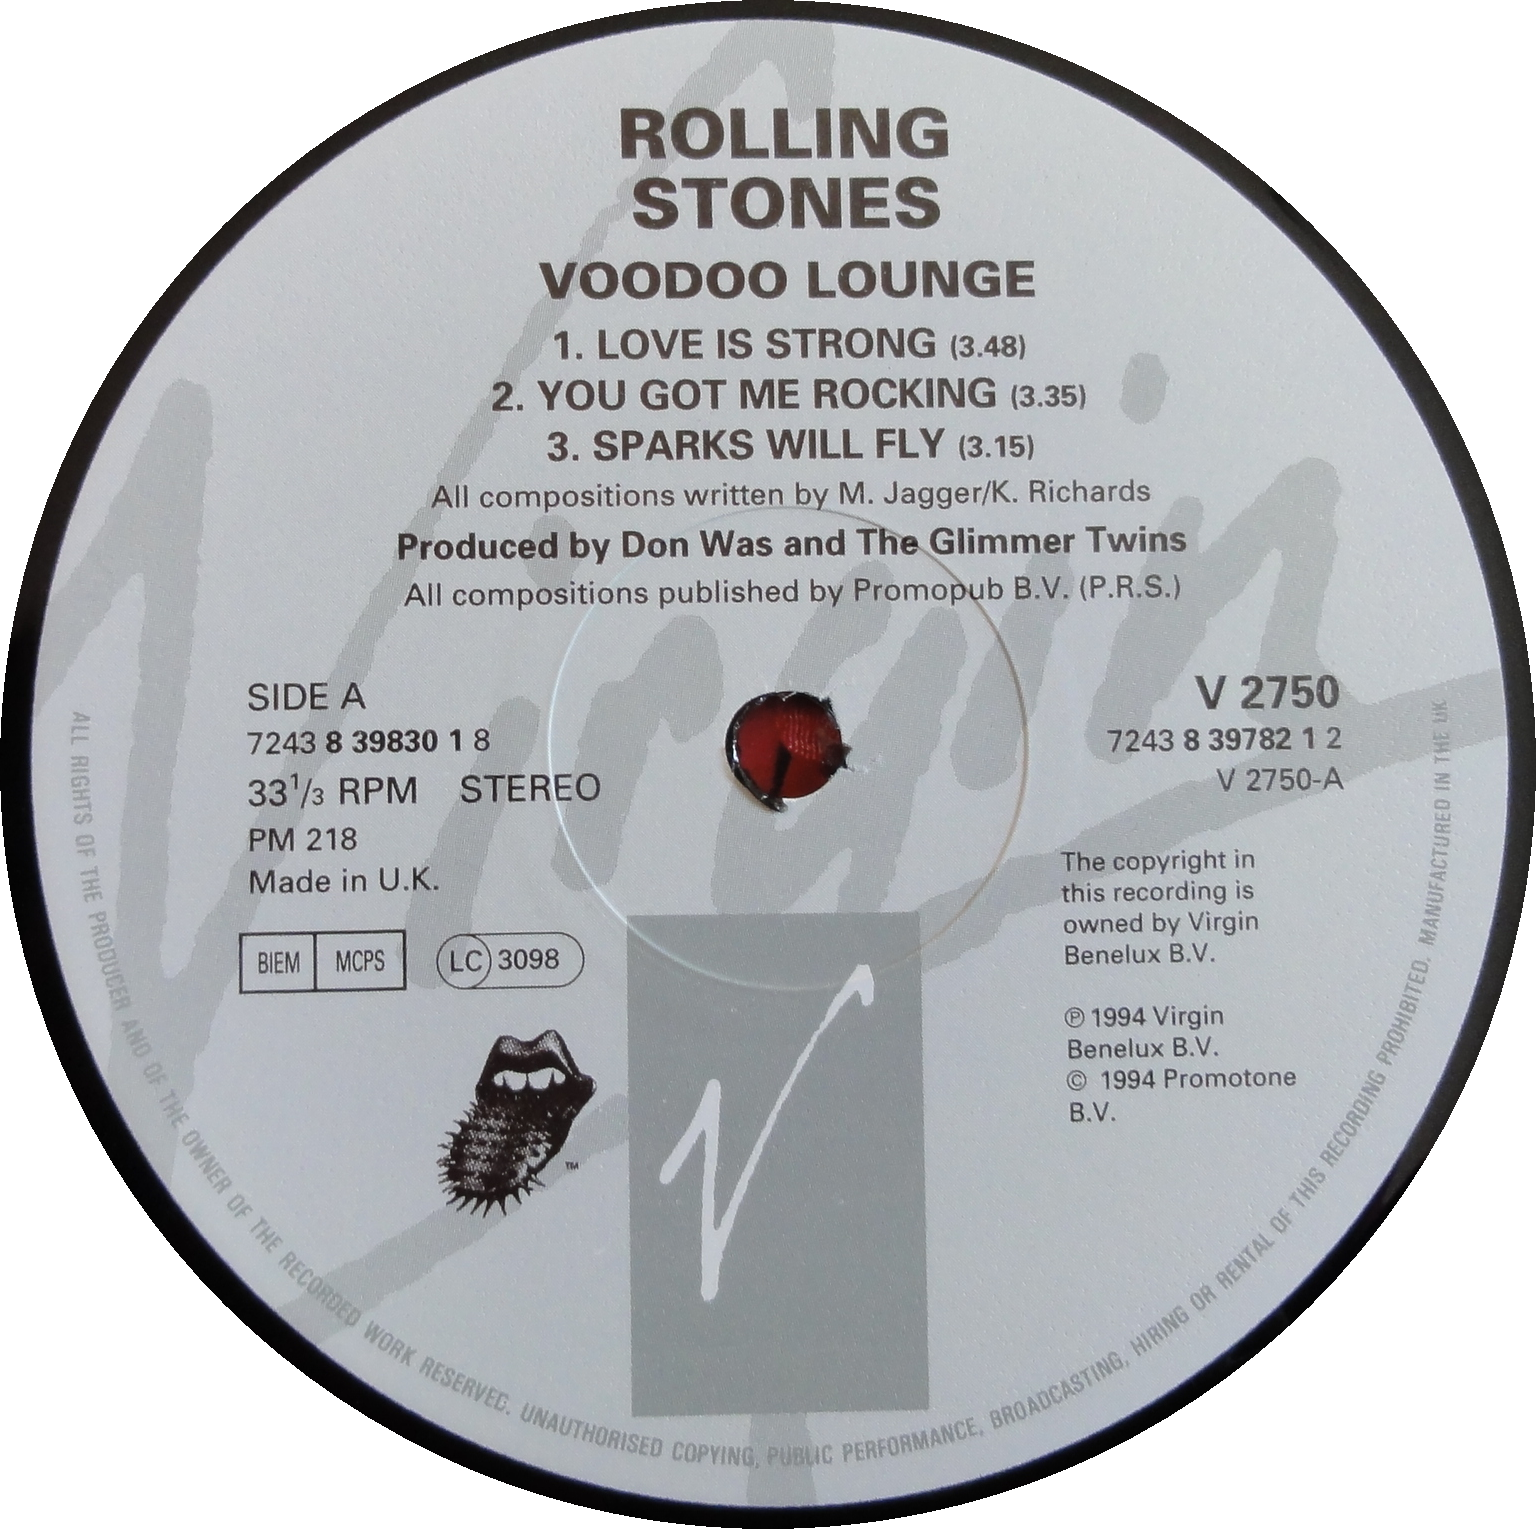 Rolling stone love. The Rolling Stones Voodoo Lounge 1994. Rolling Stones "Voodoo Lounge". Rolling Stones Voodoo Lounge обложка альбома. 1994 - Voodoo Lounge.